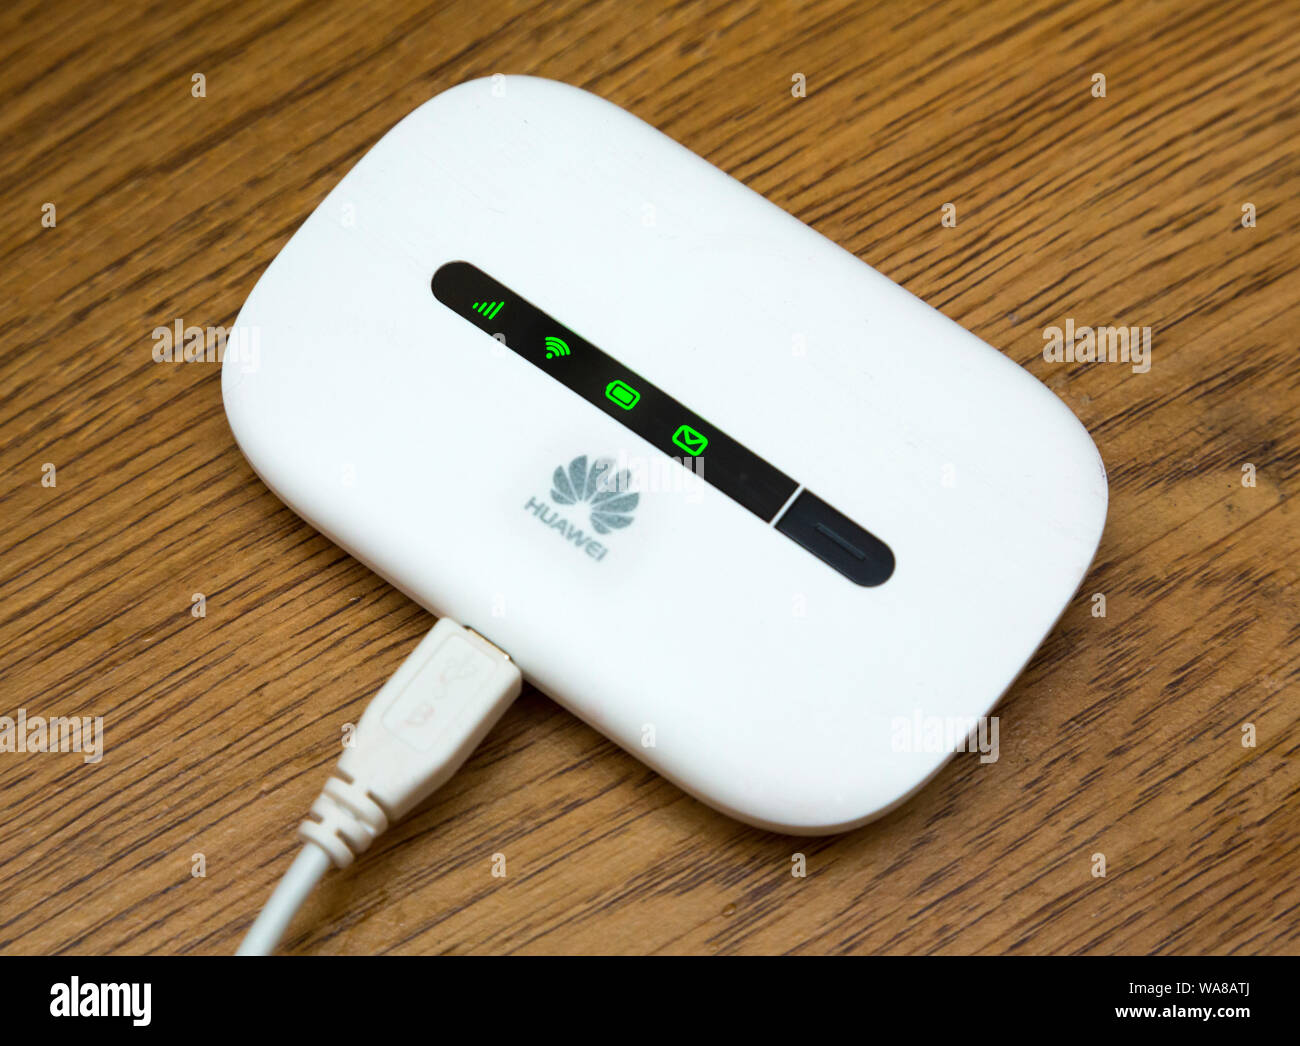 Huawei E5330 3G modem / router Stock Photo